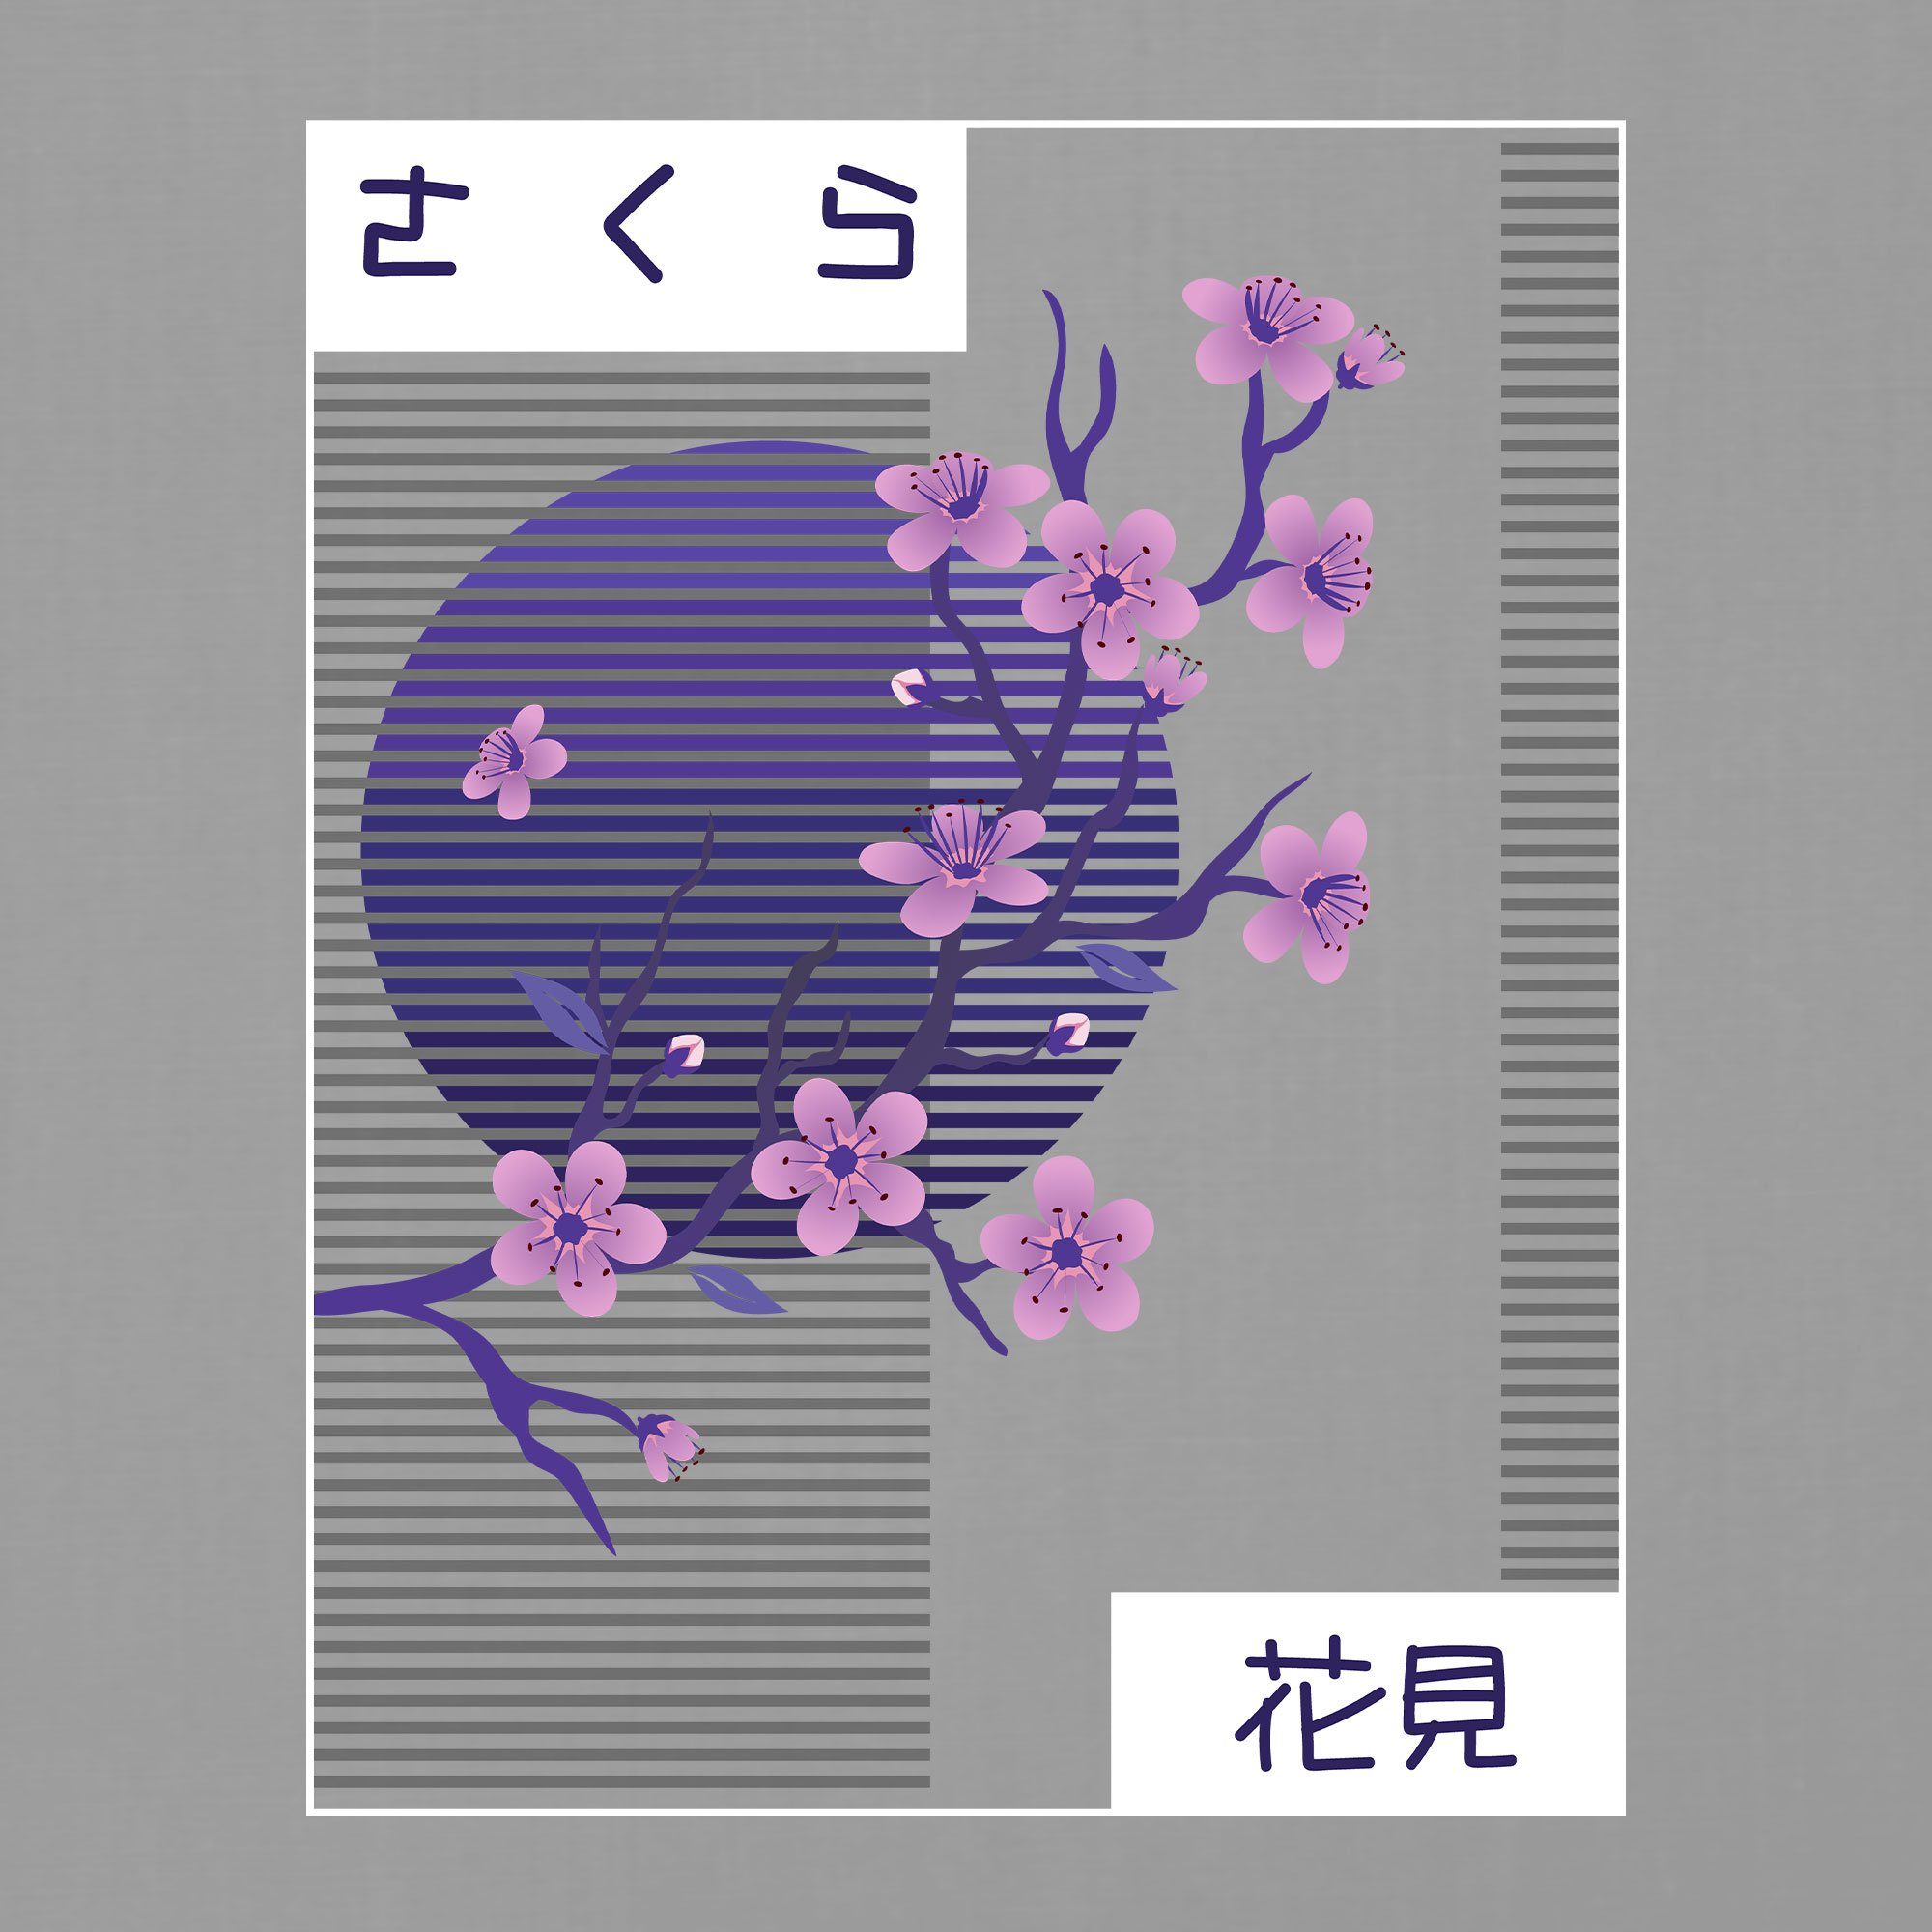 Cherry Formatee Heather Kurzarmshirt Herren Quattro - Ästhetik Grau Japanese Blossom T-Shirt (1-tlg) Aesthetic Vaporwave